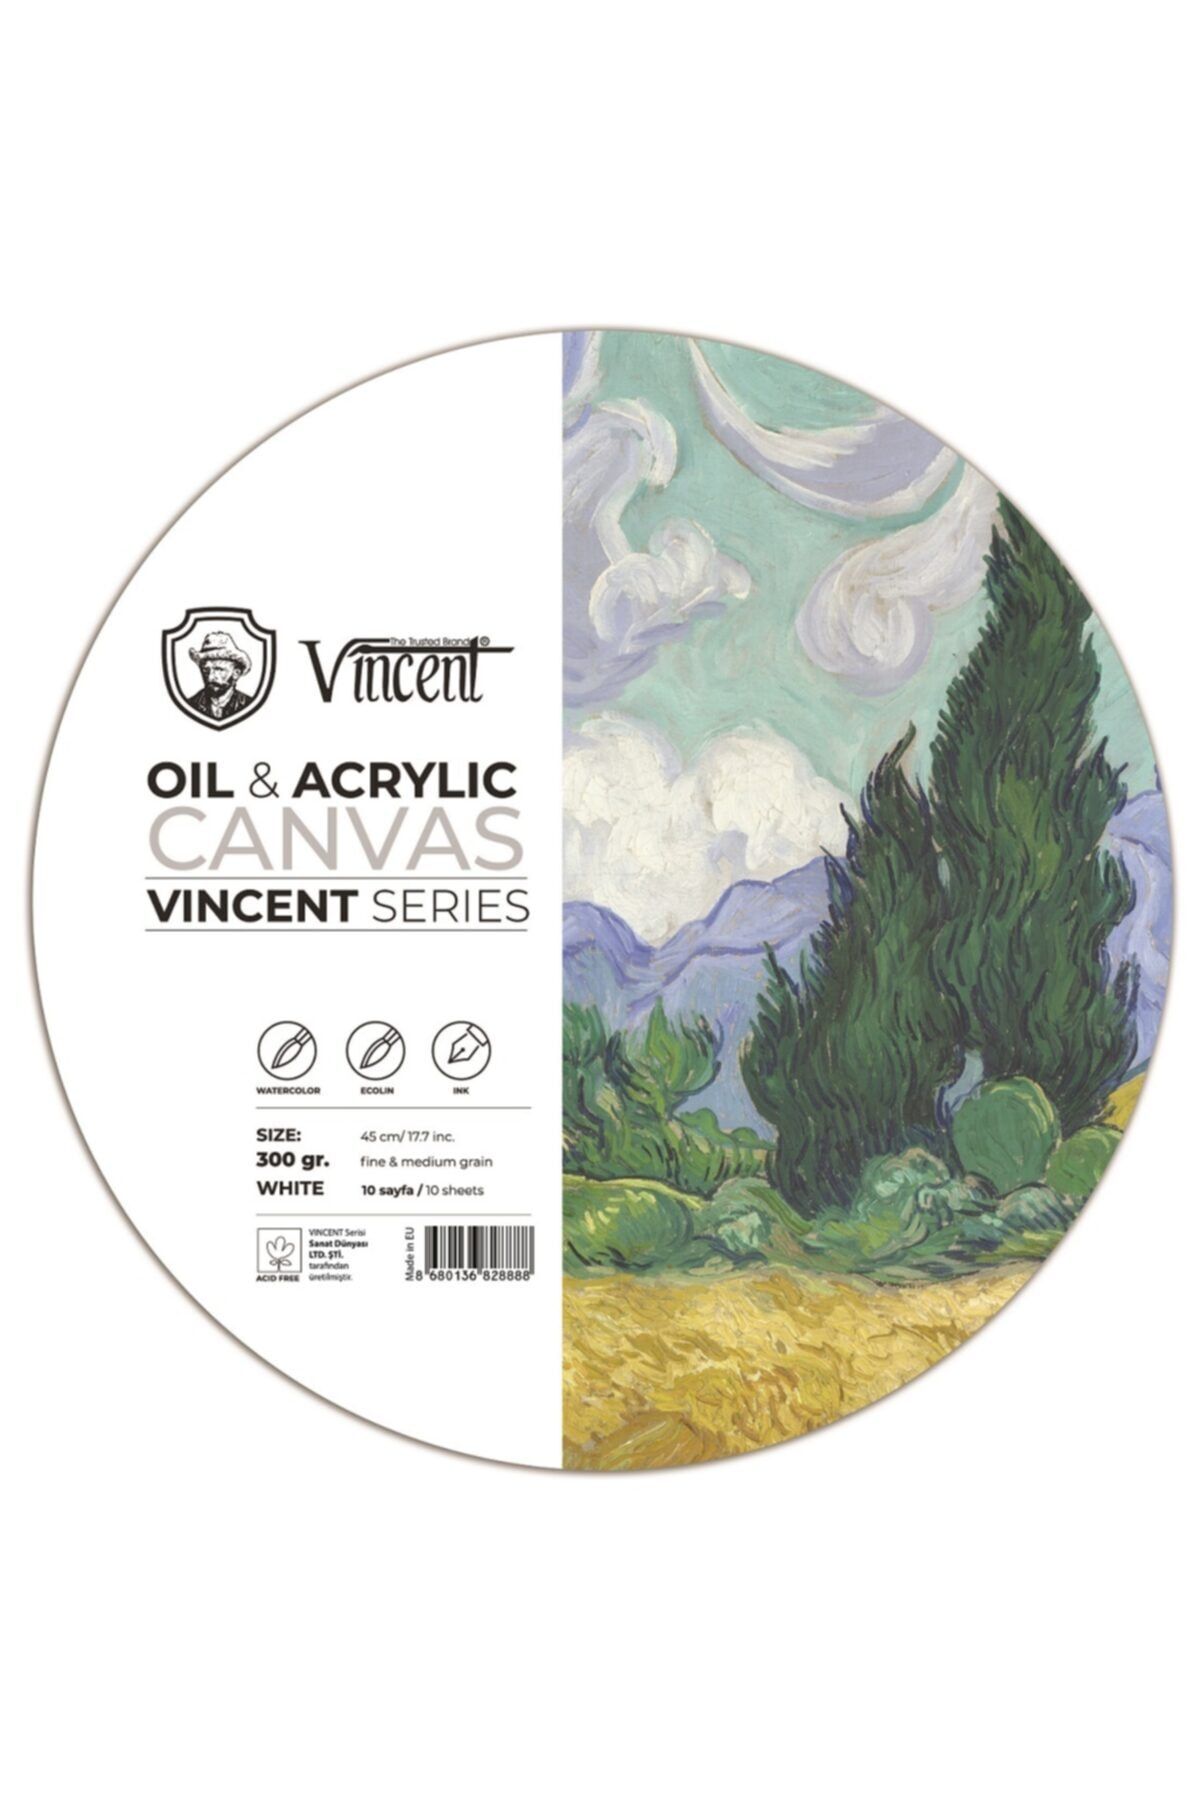 Vincent Vıncent Oıl Acrylıc Daire Canvas Whıte 300gr 45cm Yağlı Ve Akrilik Boya Defteri